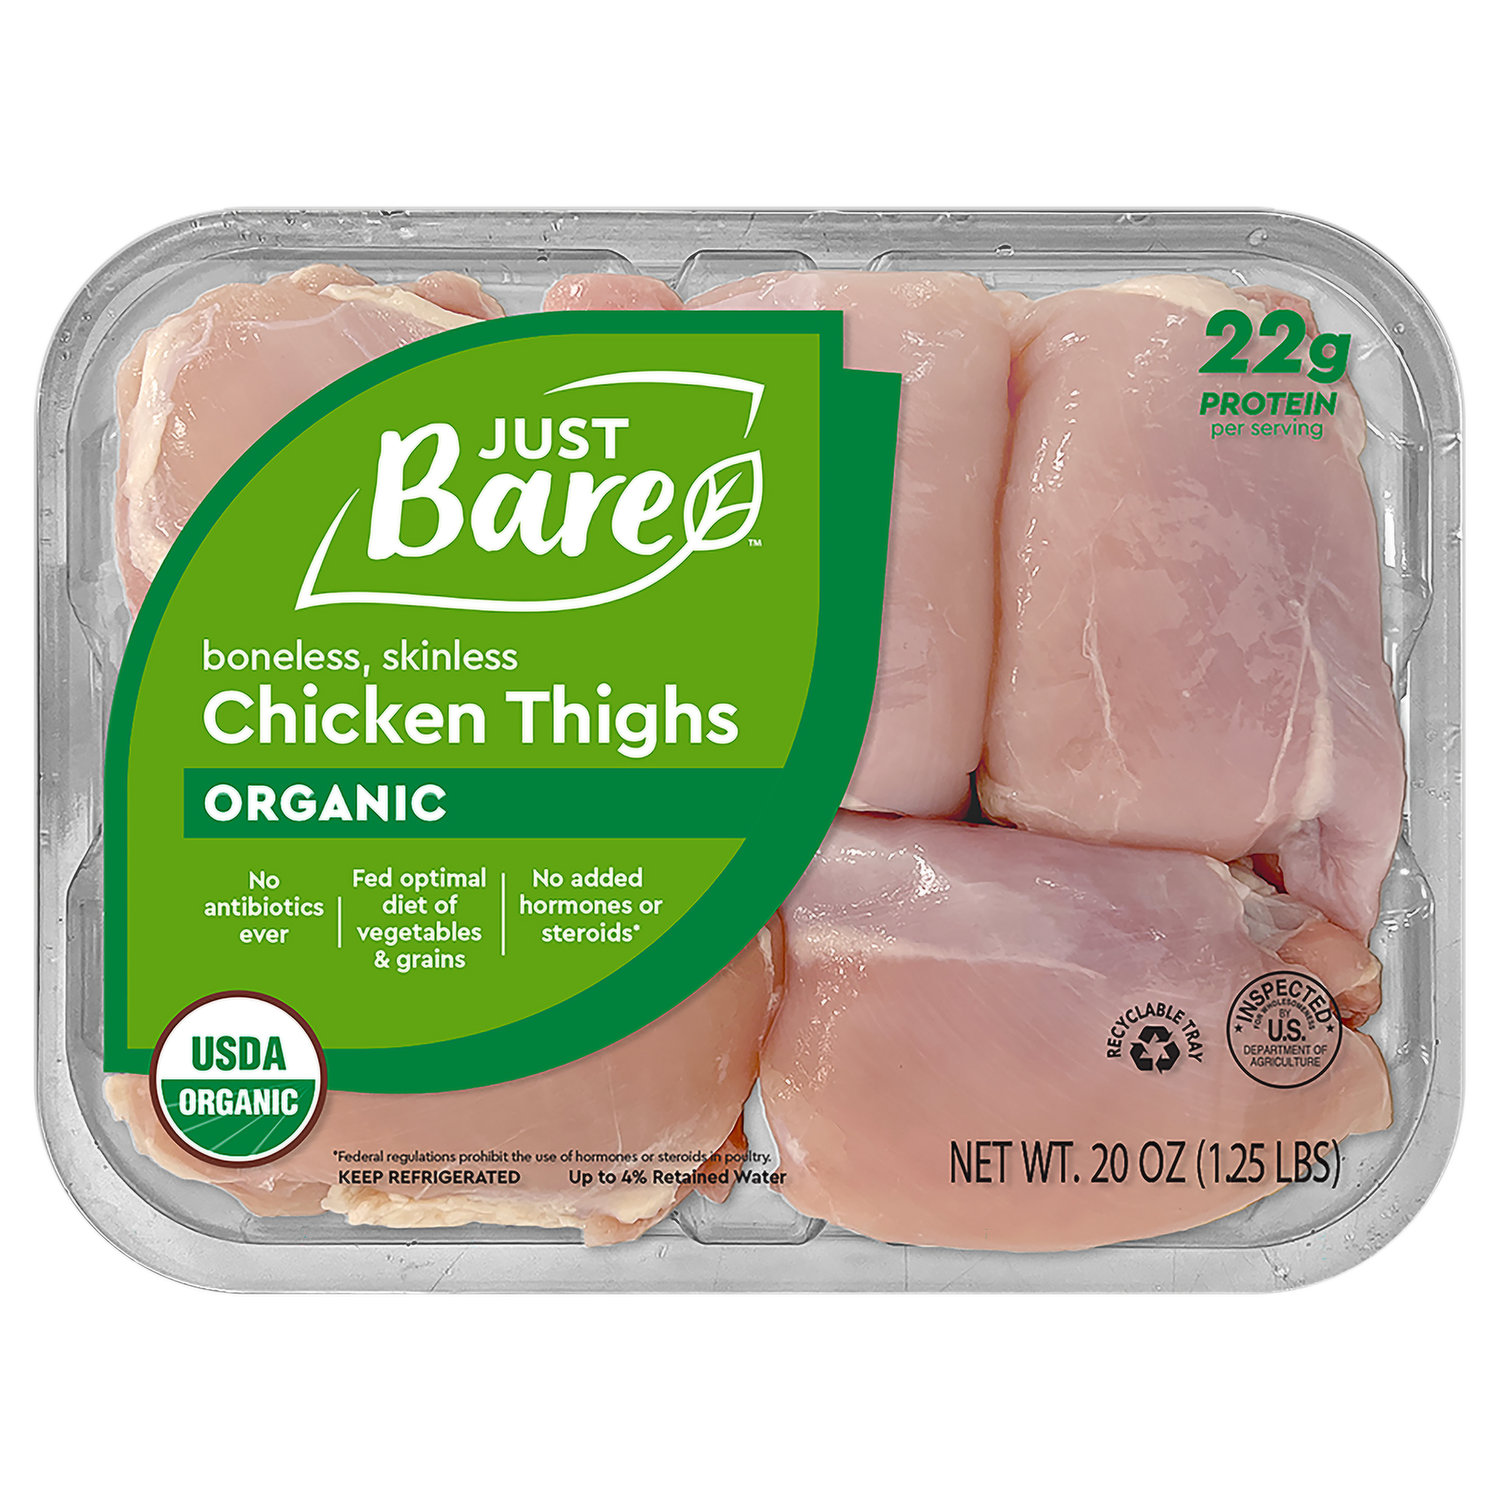 Just Bare Boneless Skinless Chicken Thighs